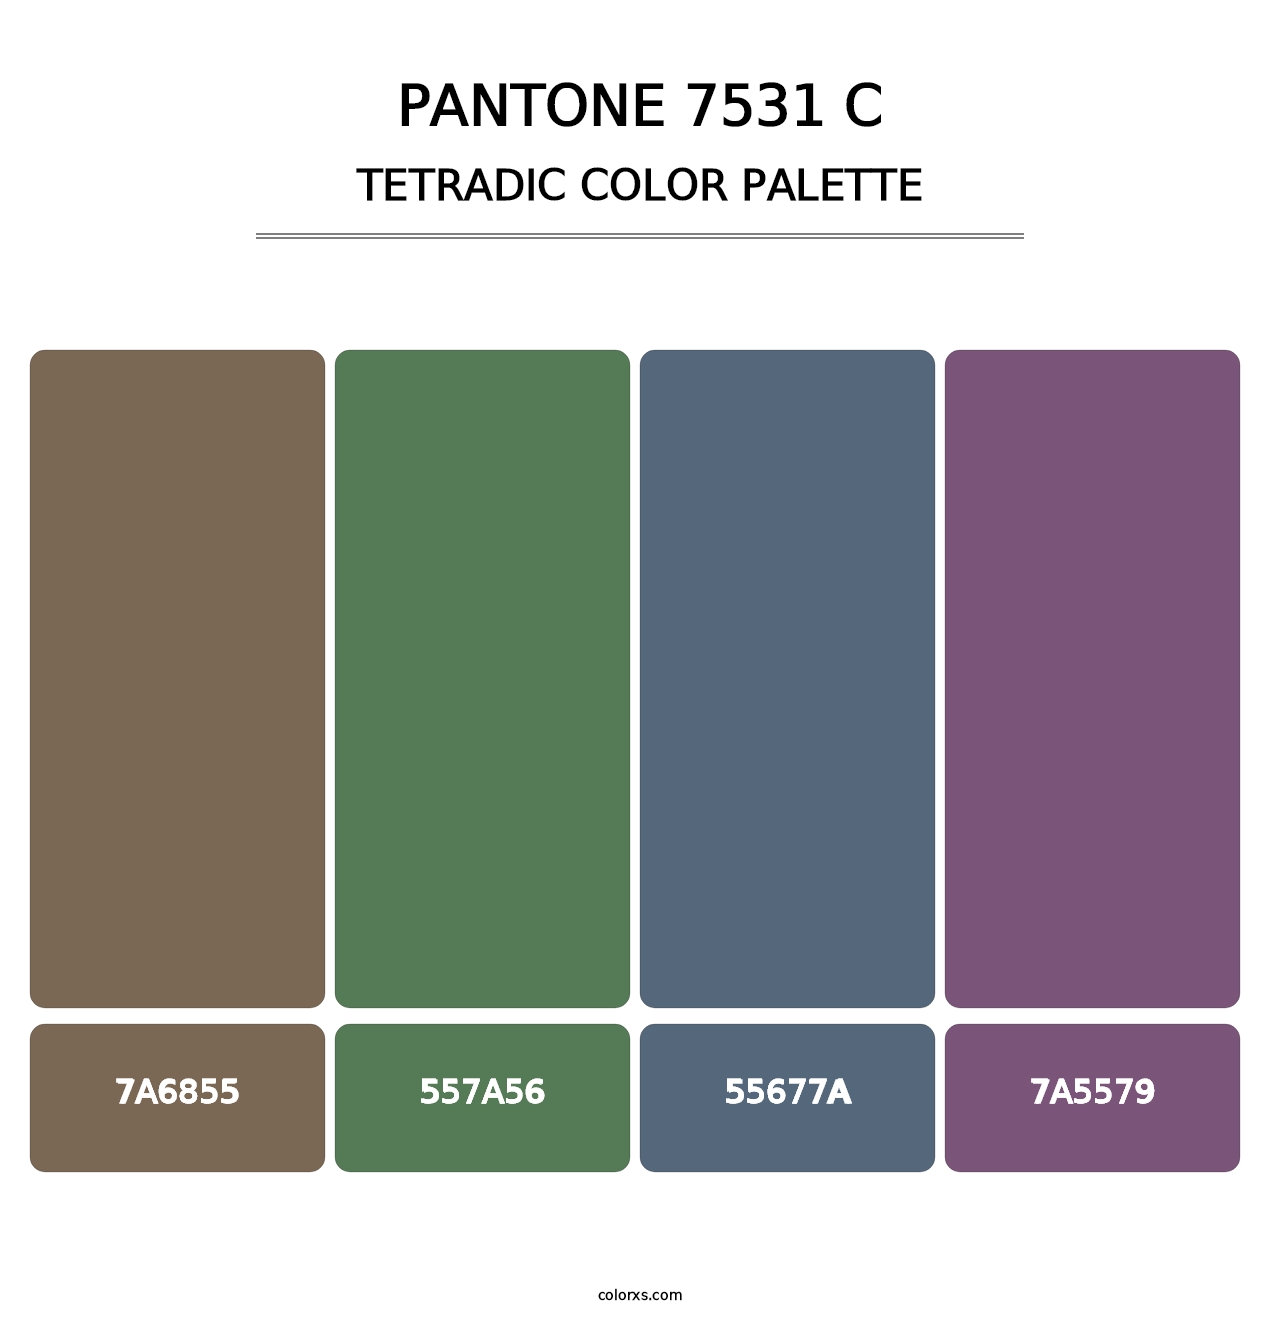 PANTONE 7531 C - Tetradic Color Palette